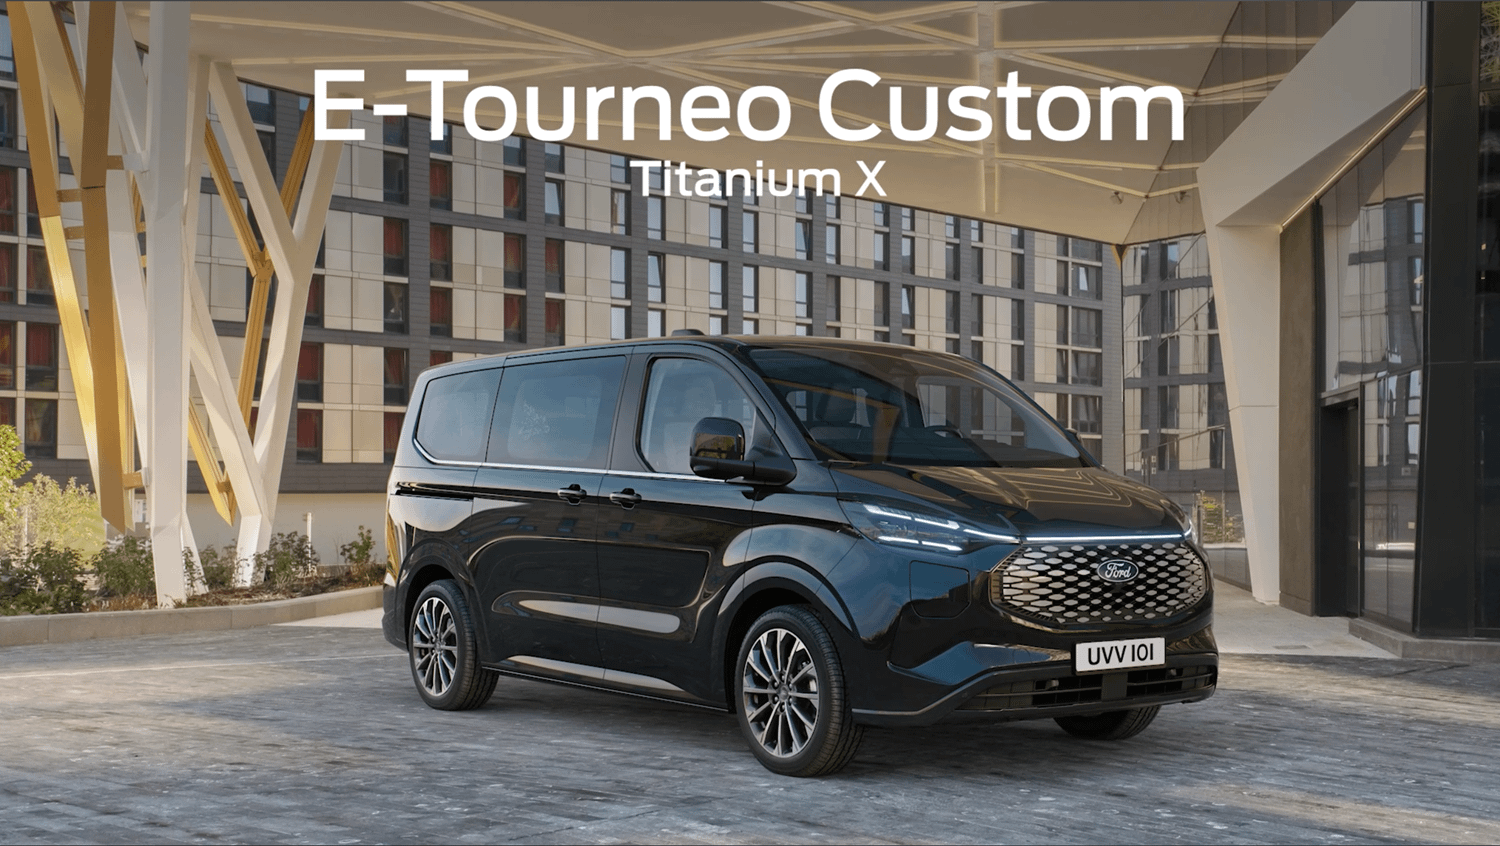 E-Tourneo Custom